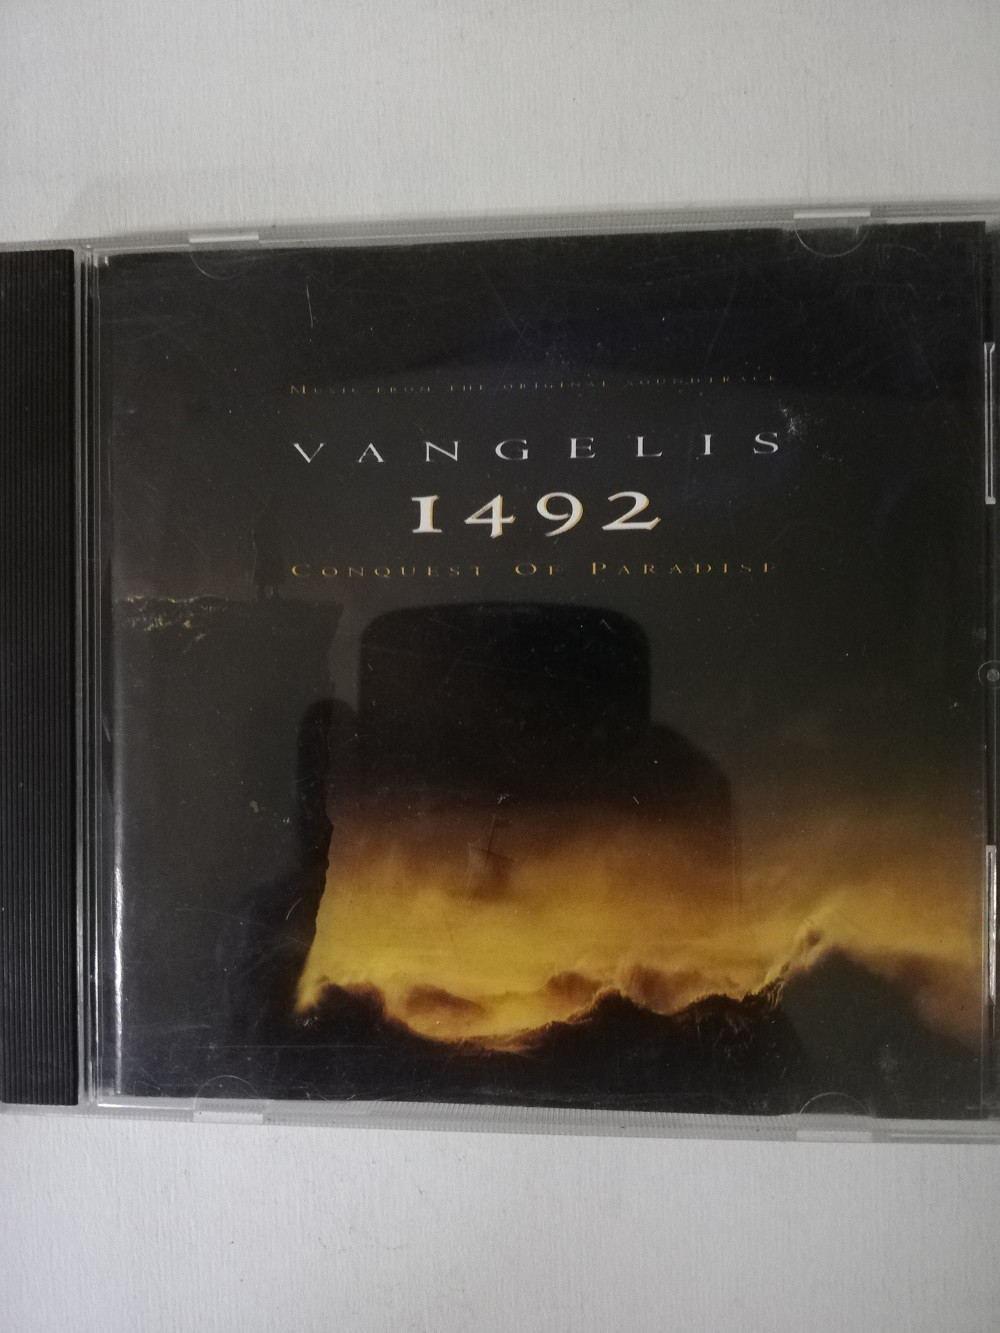 Imagen CD VANGELIS - 1492, CONQUEST OF PARADISE